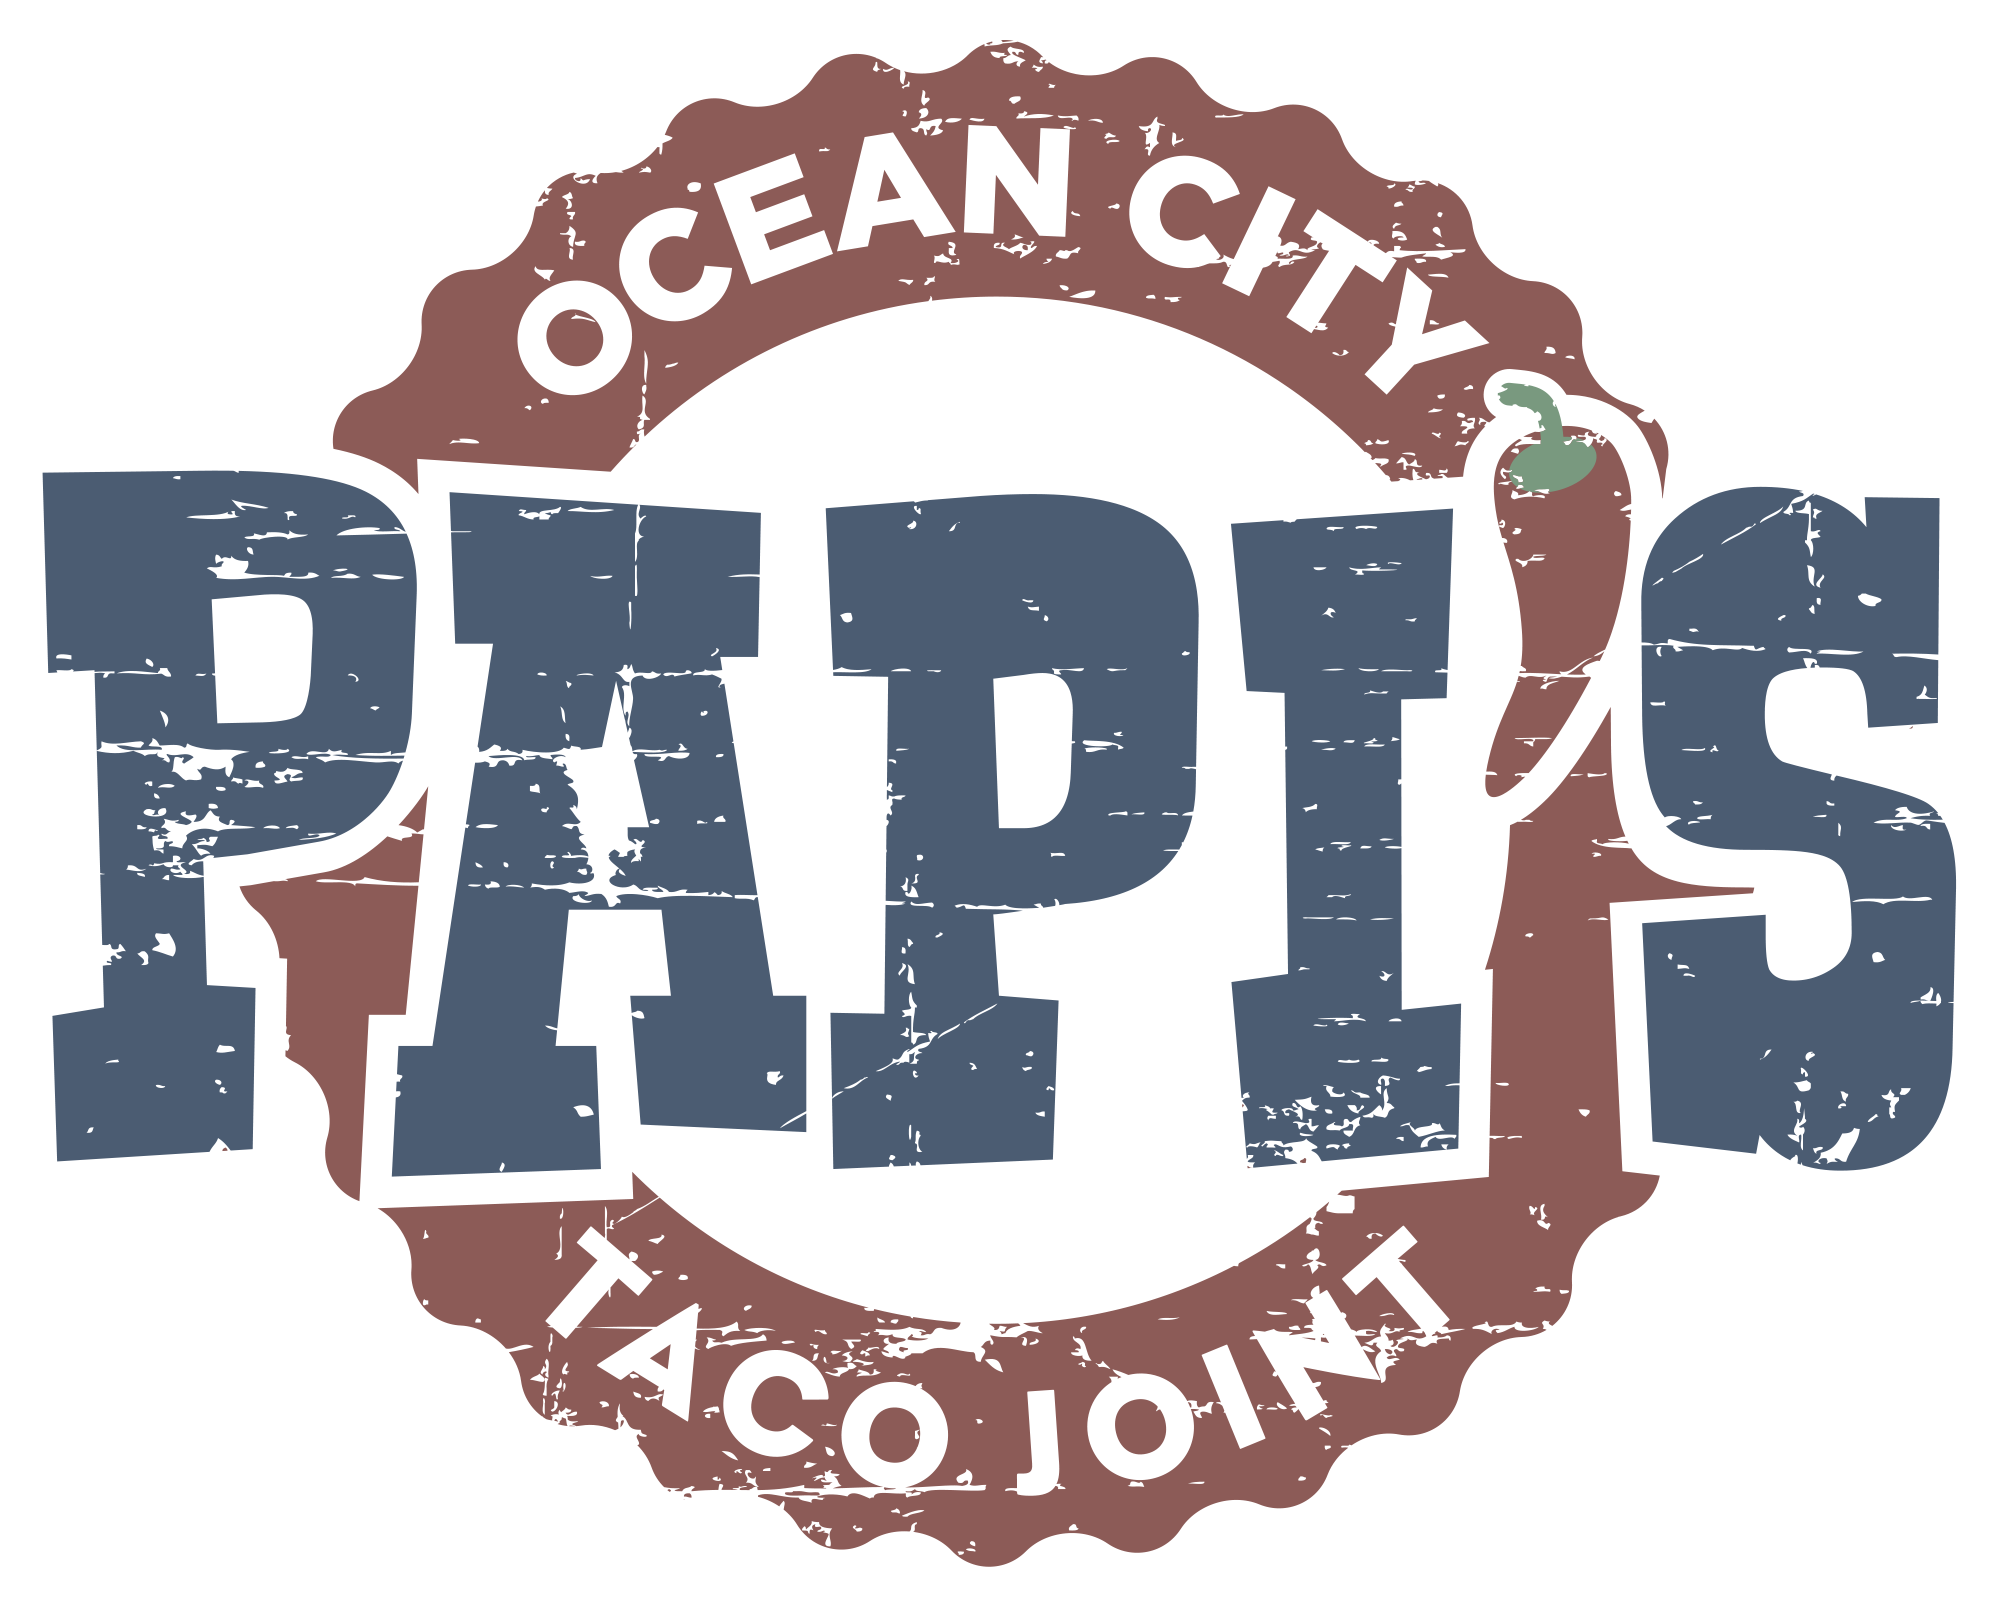 Papi's Ocean City